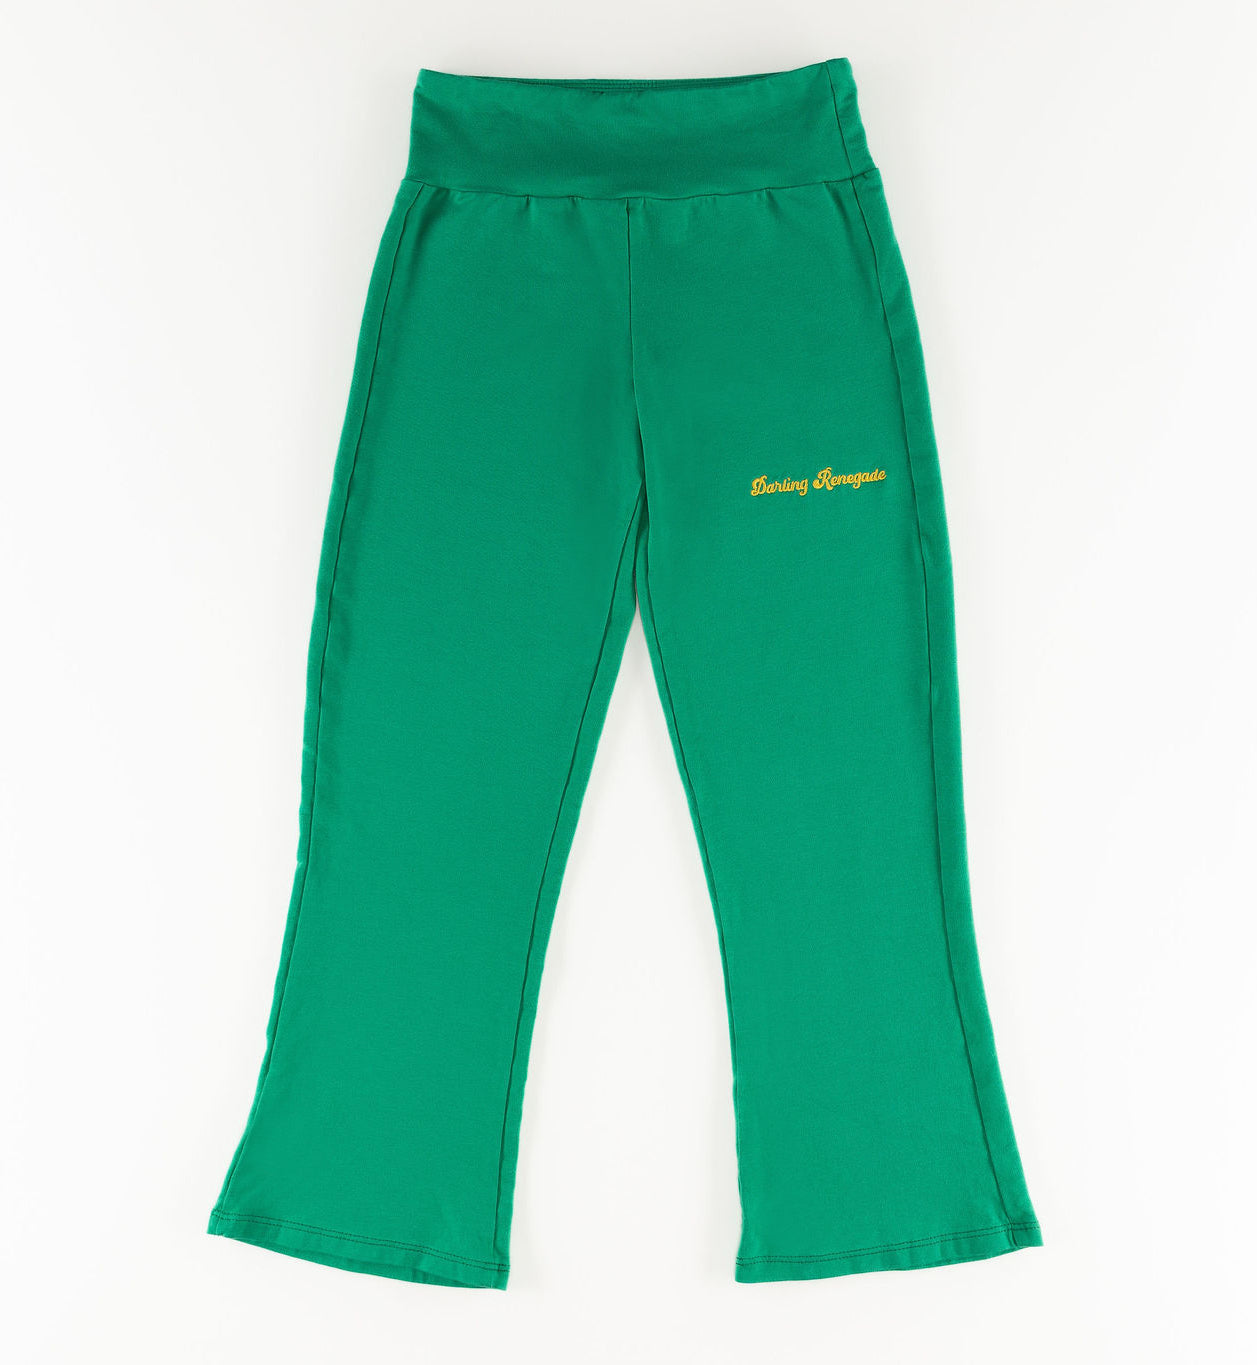 Signature Sweatpants in Green/Yellow